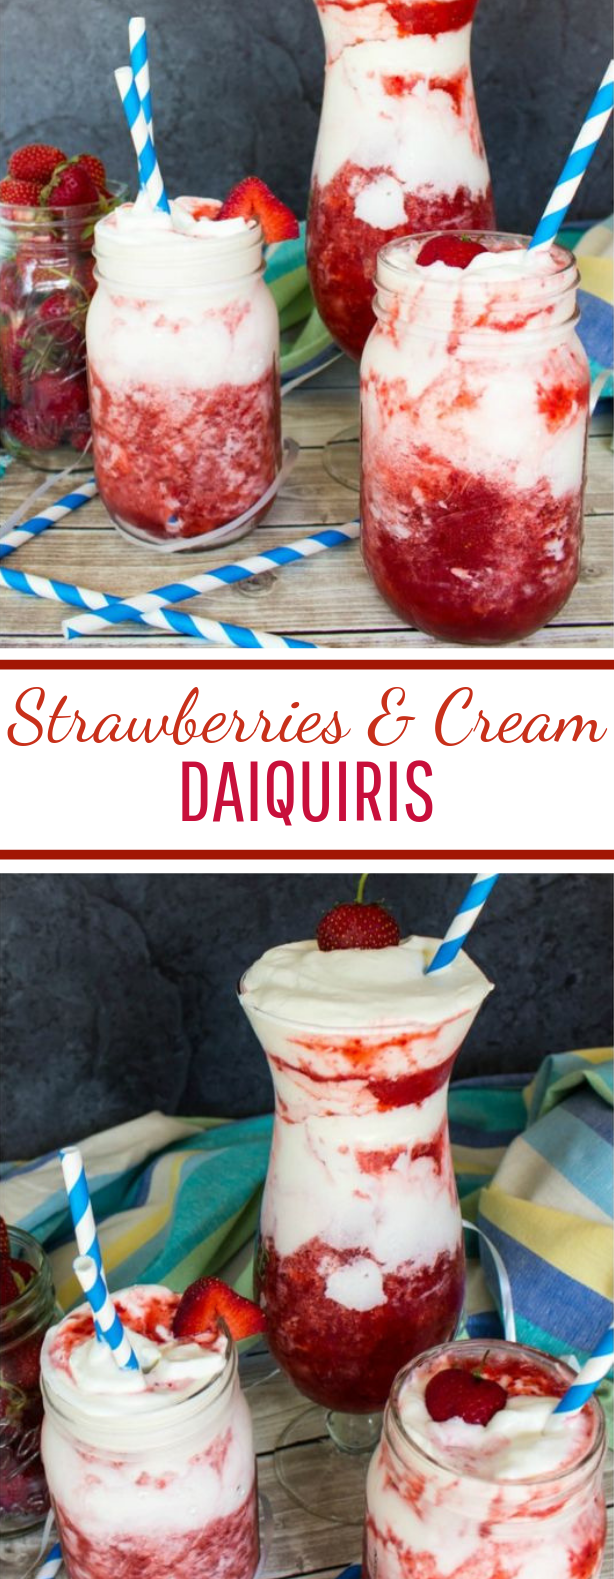 Strawberries & Cream Daiquiris #fresh #drink